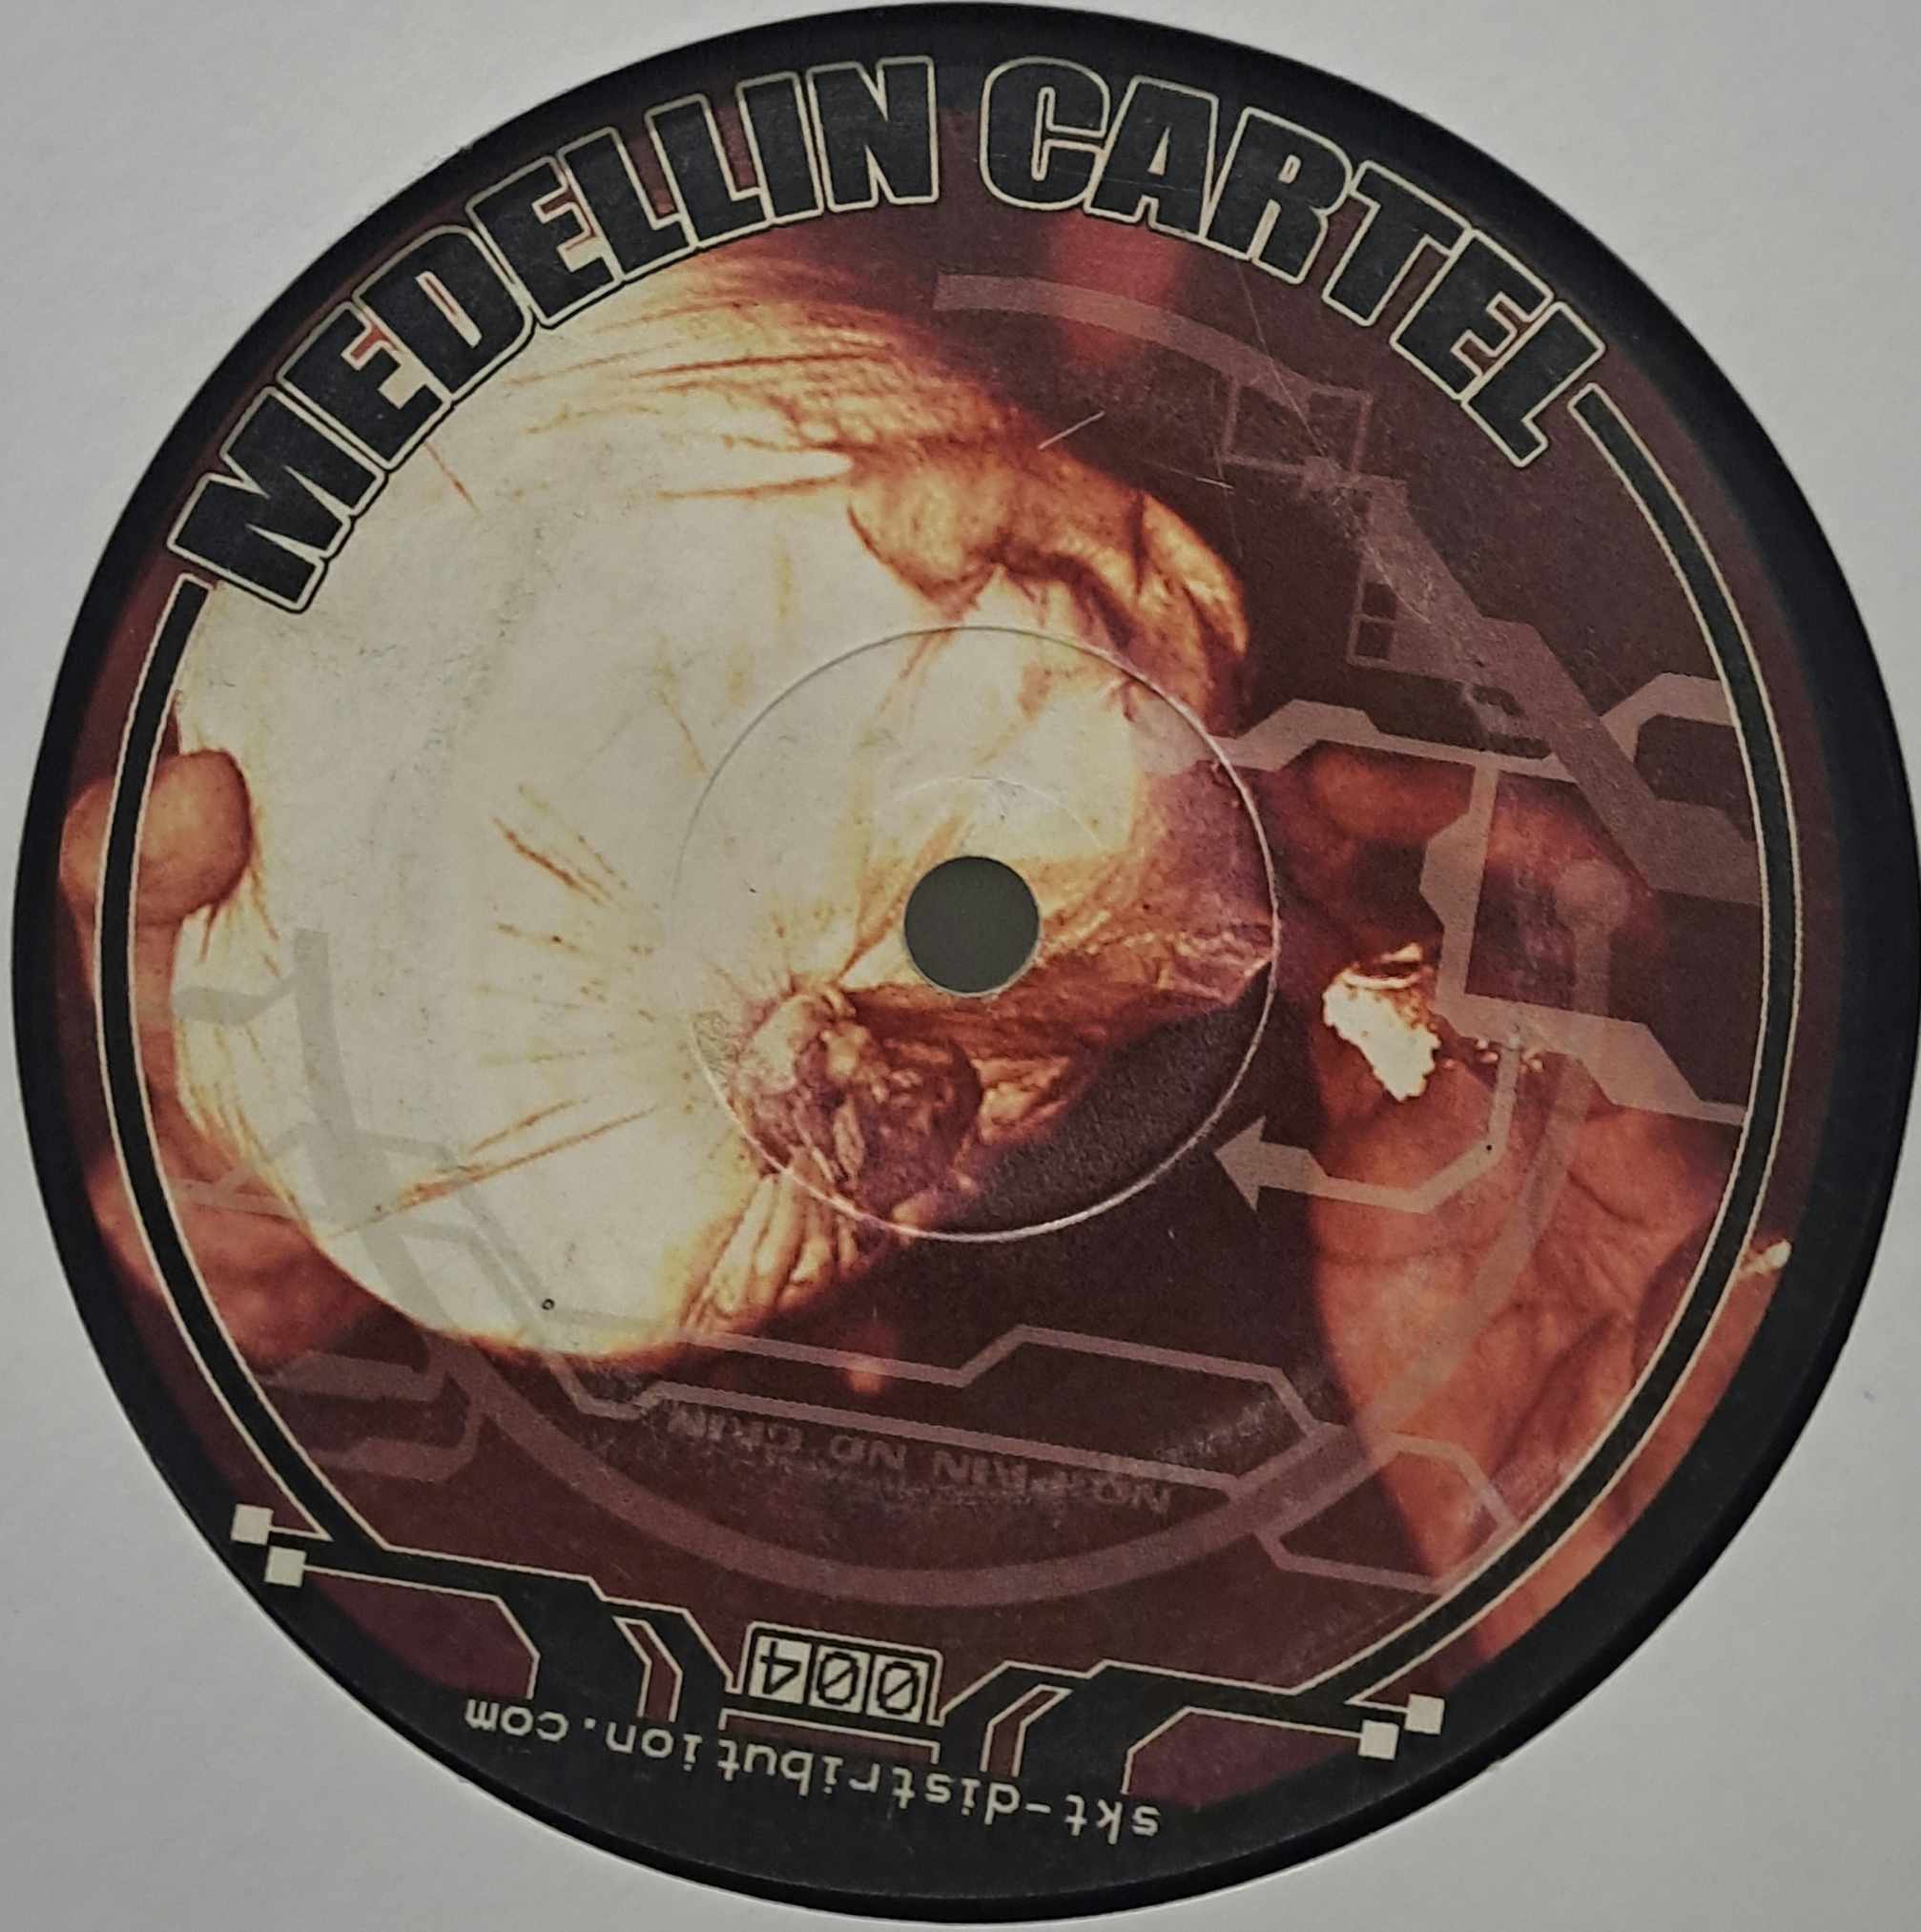 Medellin Cartel 04 - vinyle freetekno